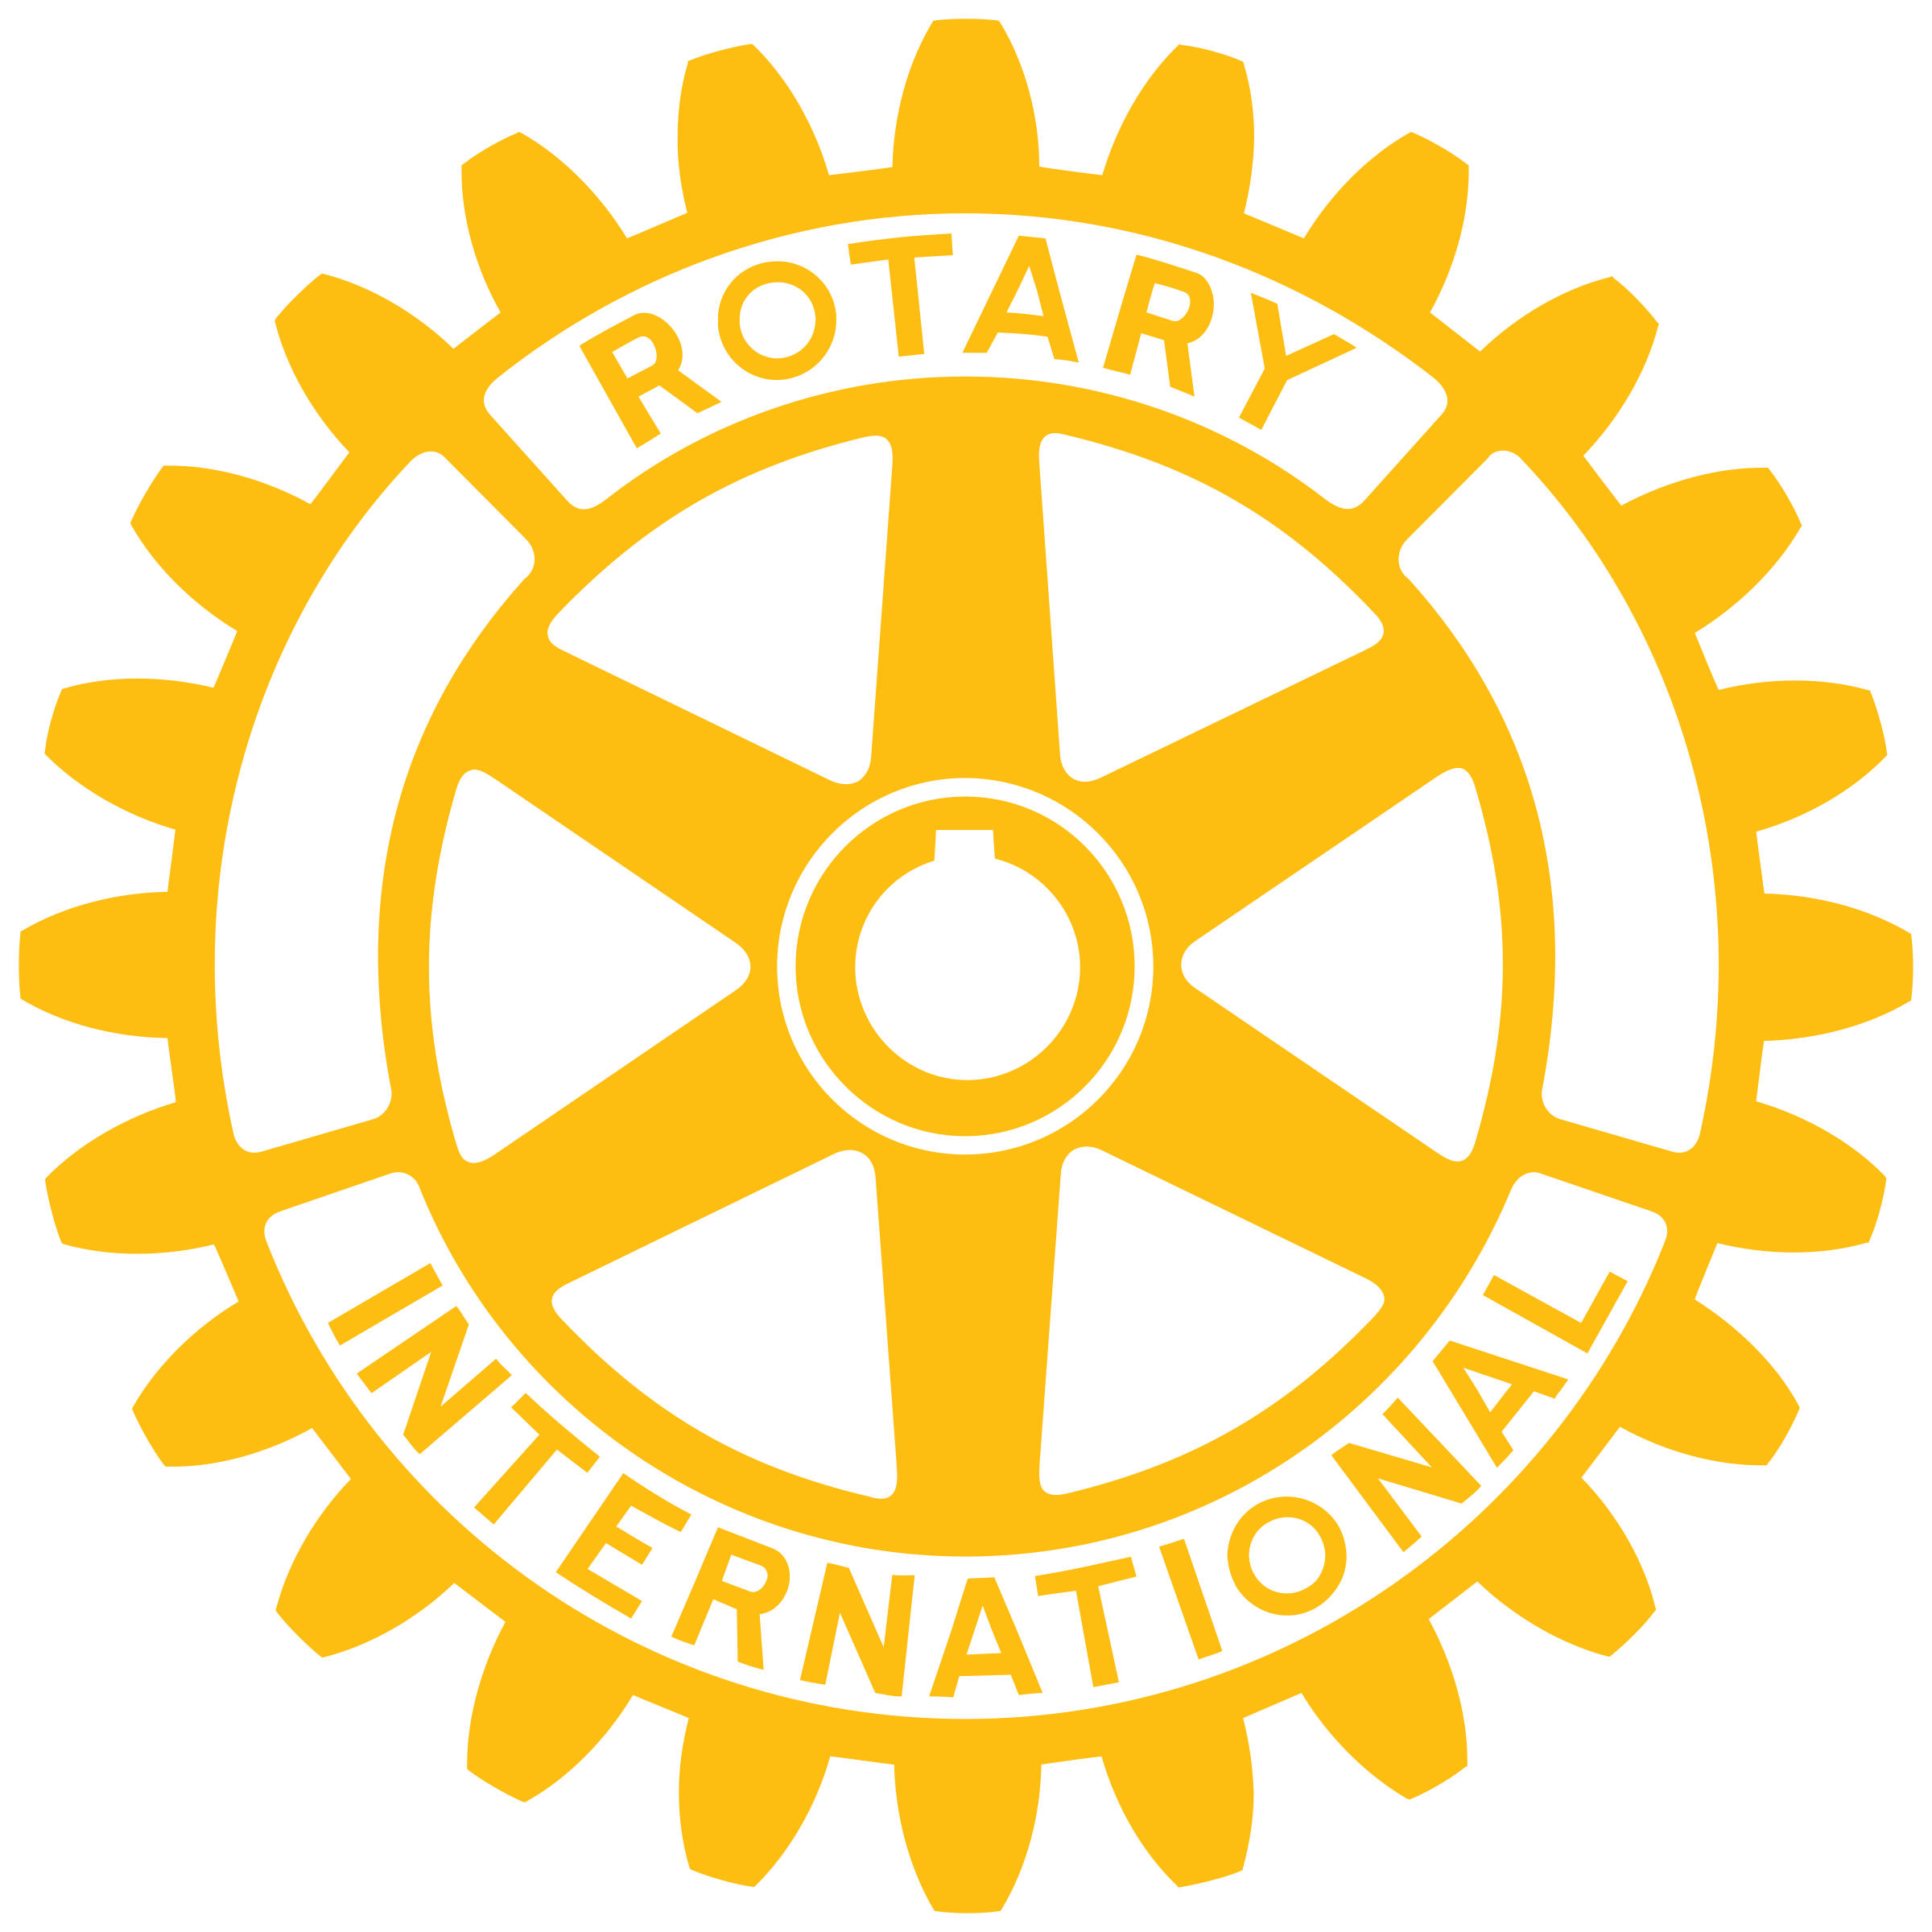 International Rotary wheel spinning